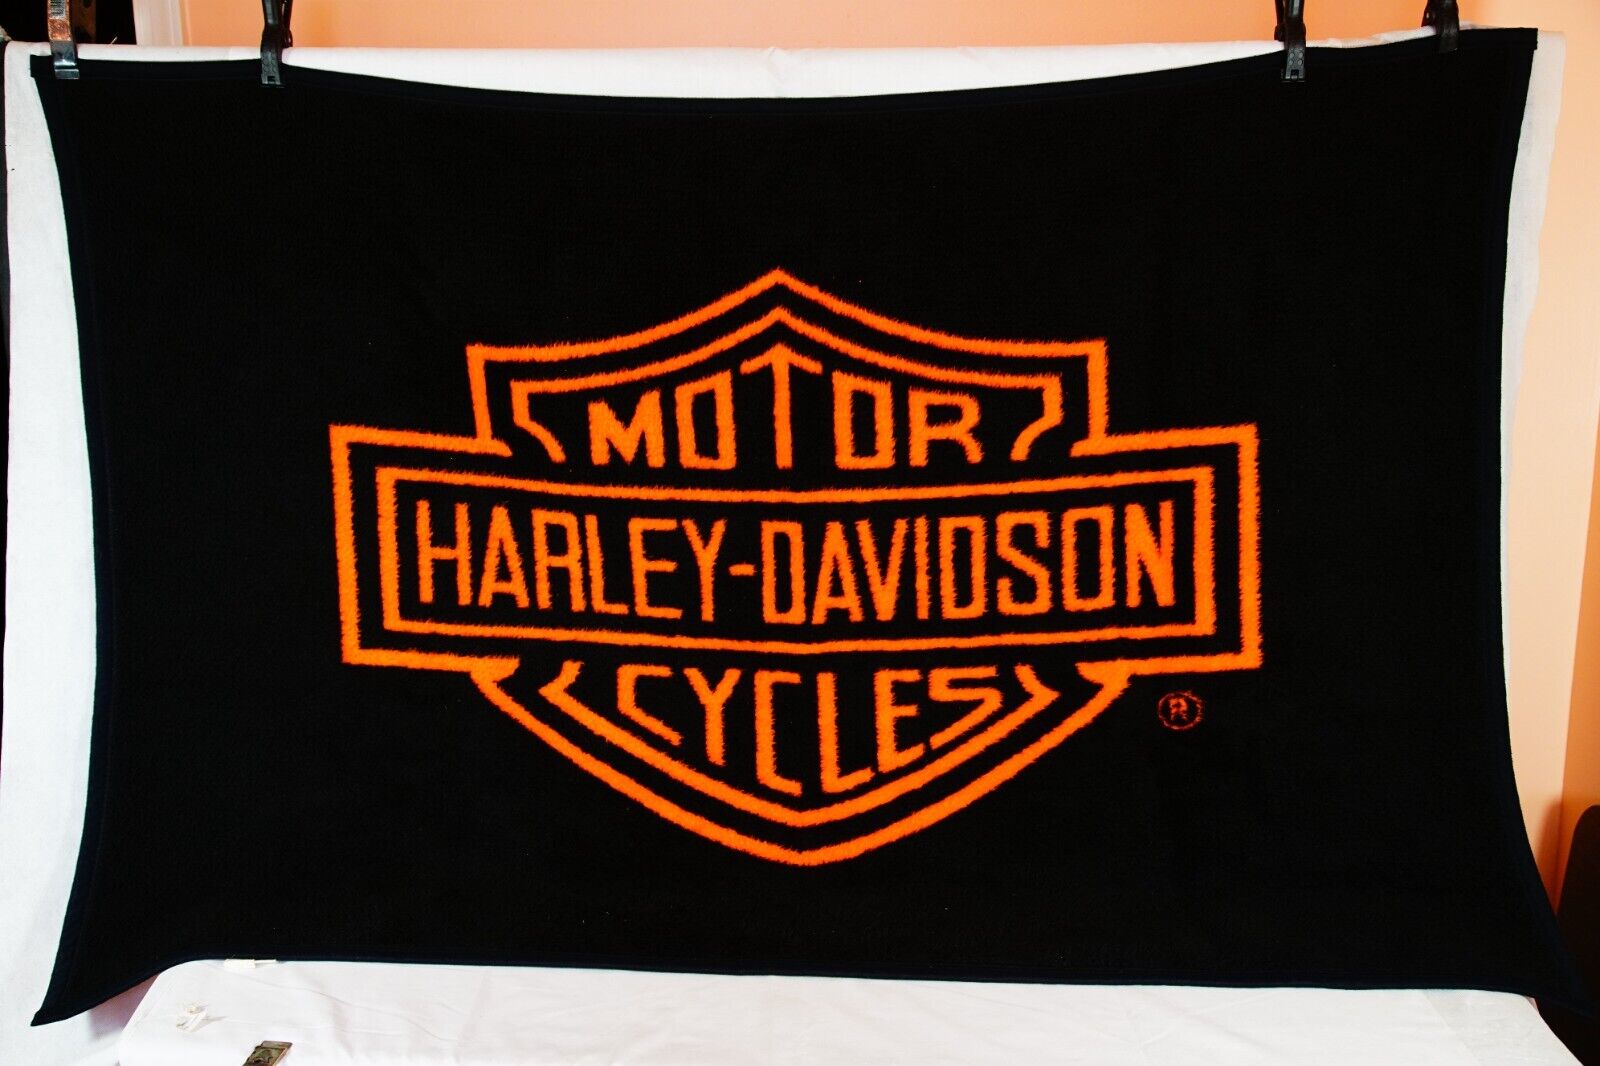 Vintage Harley Davidson Motorcycles Throw Blanket Black & Orange 57x39